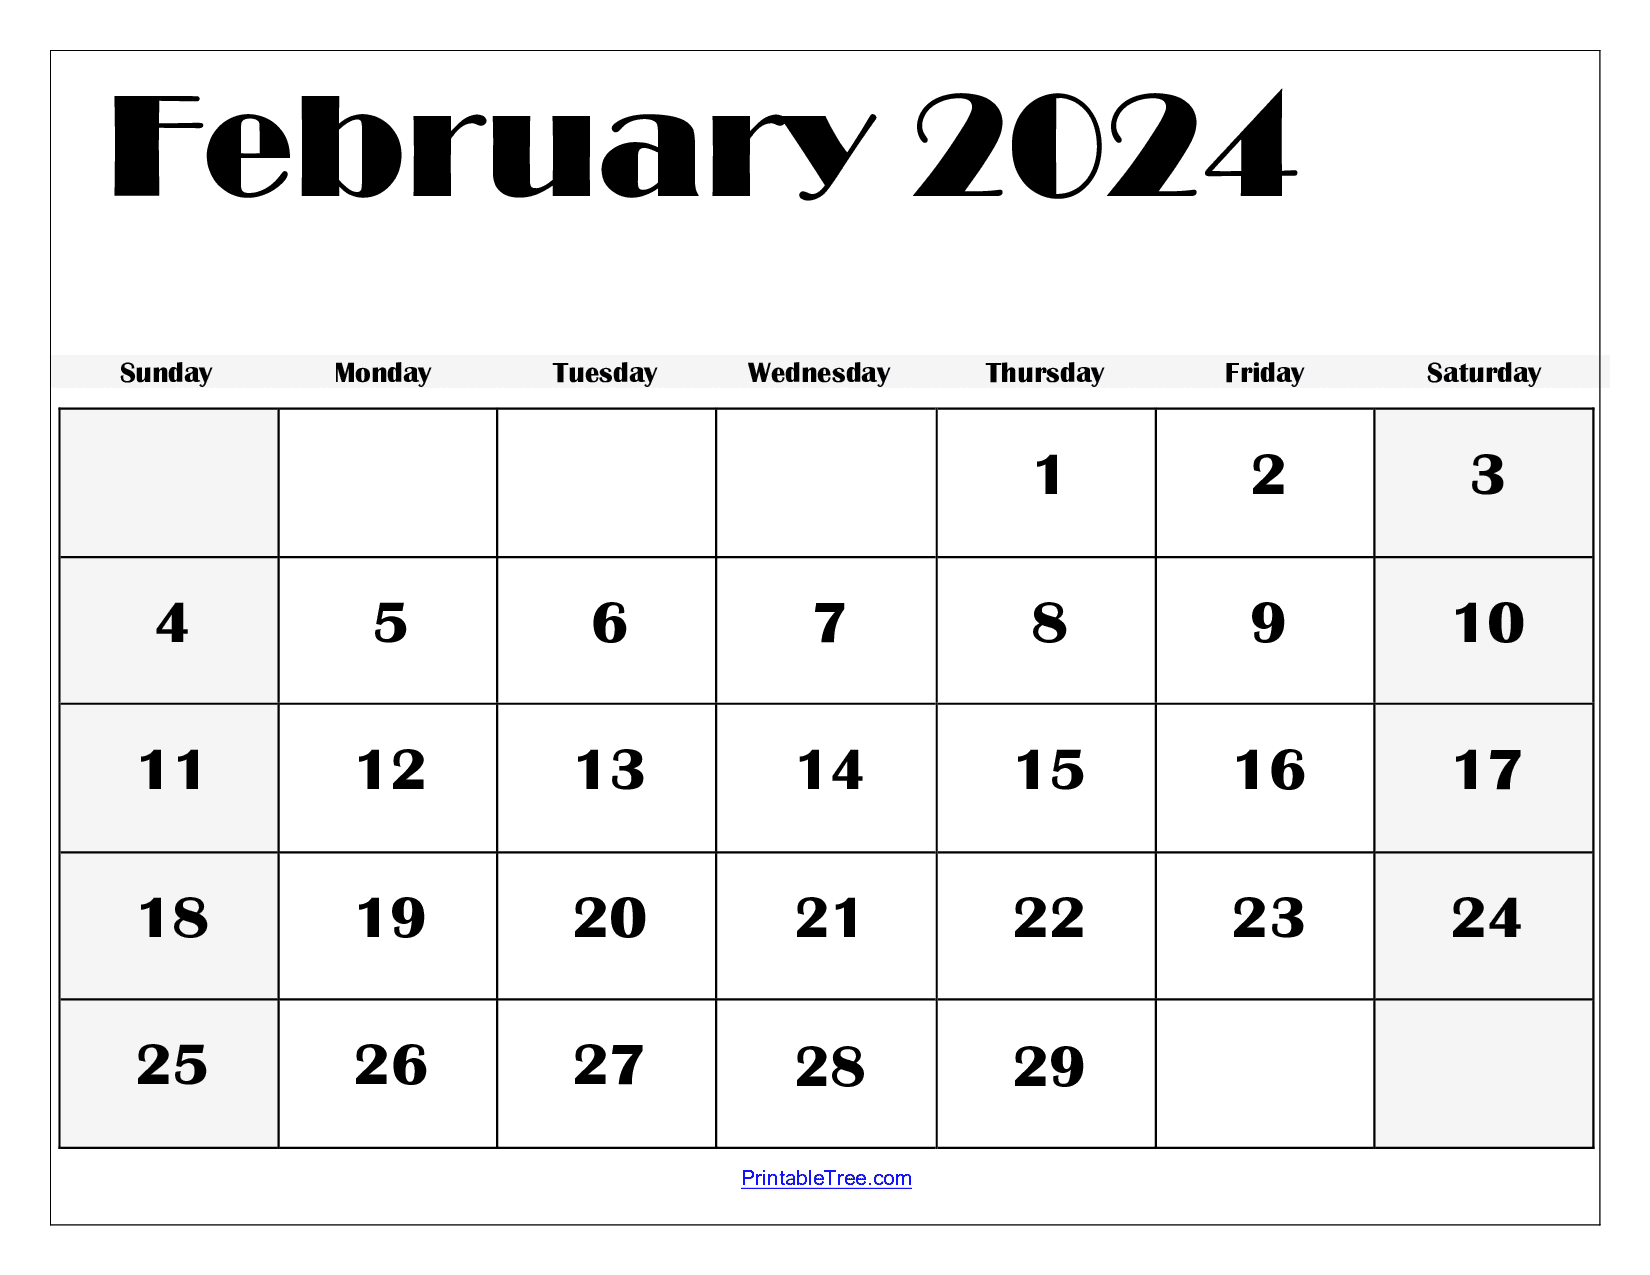 February 2024 Calendar Printable Pdf Template With Holidays for February Printable Calendar 2024 Free